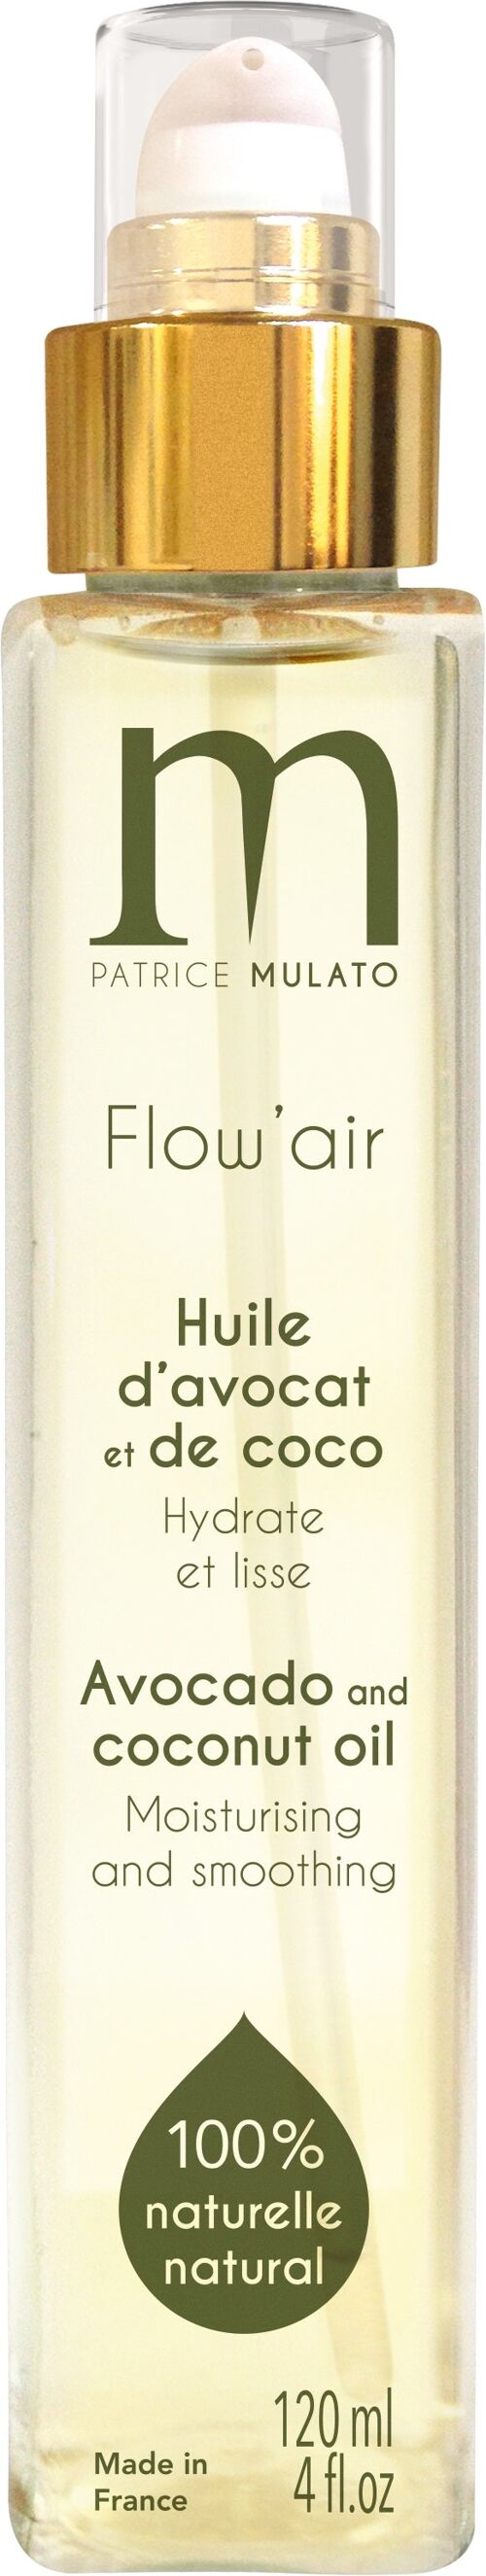 FLOW AIR HUILE D'AVOCAT COCO 120 ML